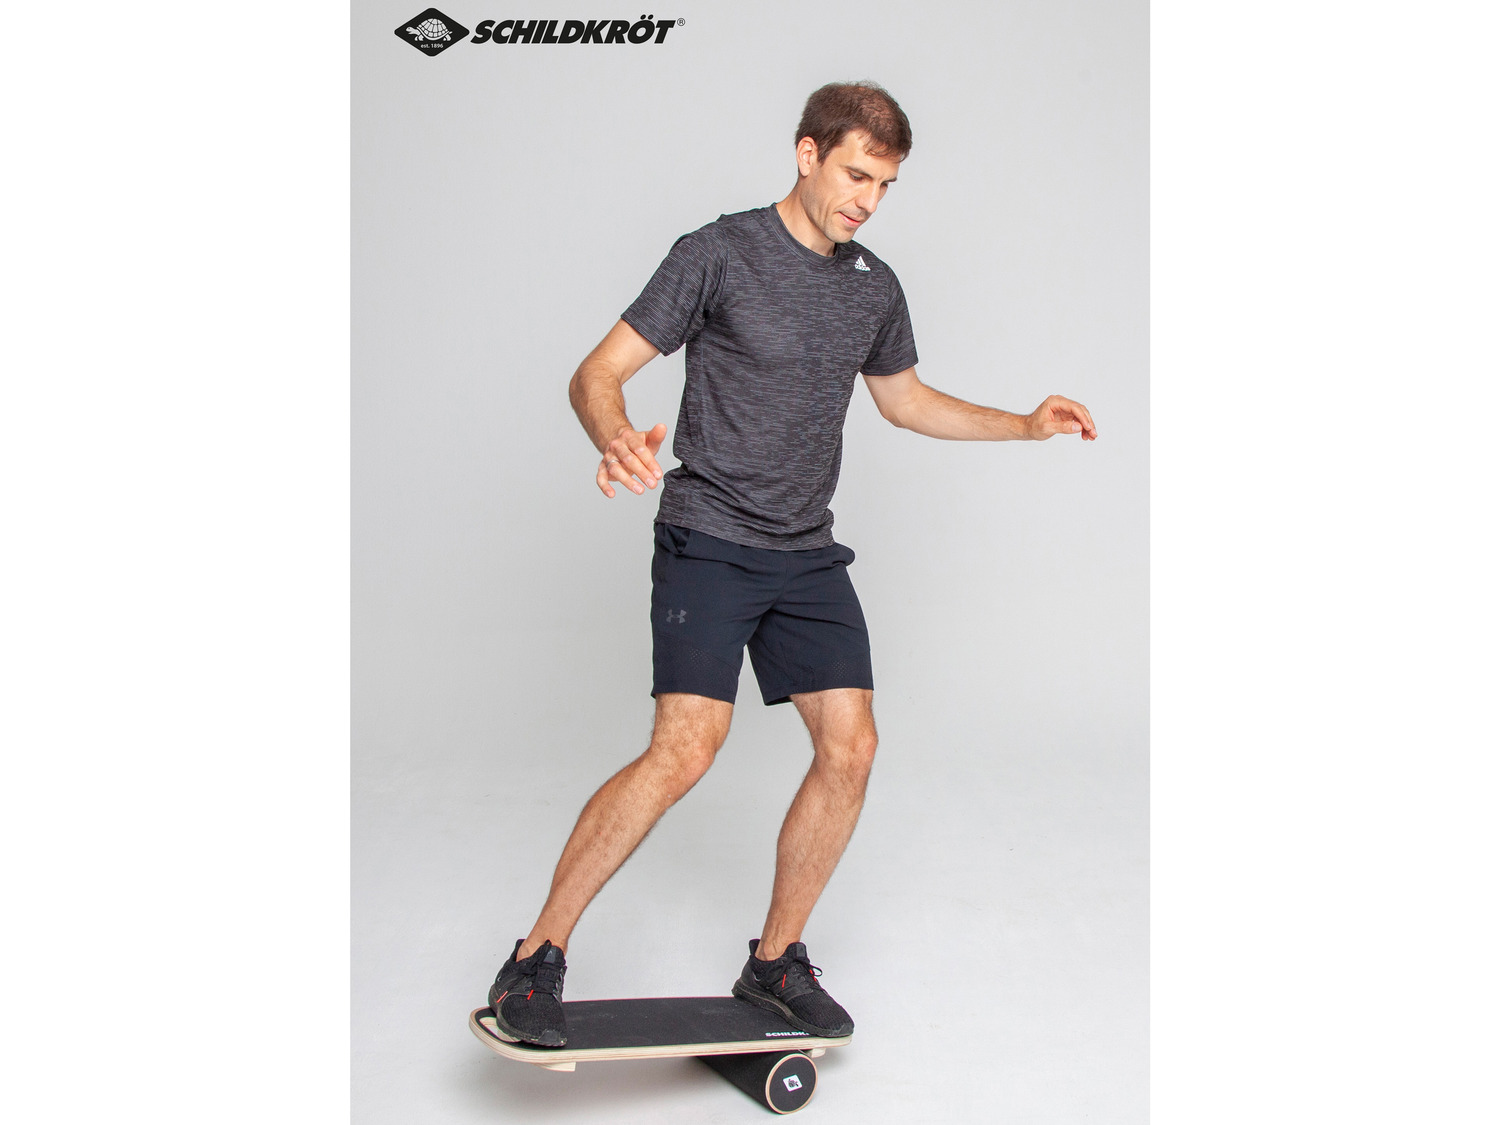 Schildkröt Fitness | Board Wooden Balance LIDL